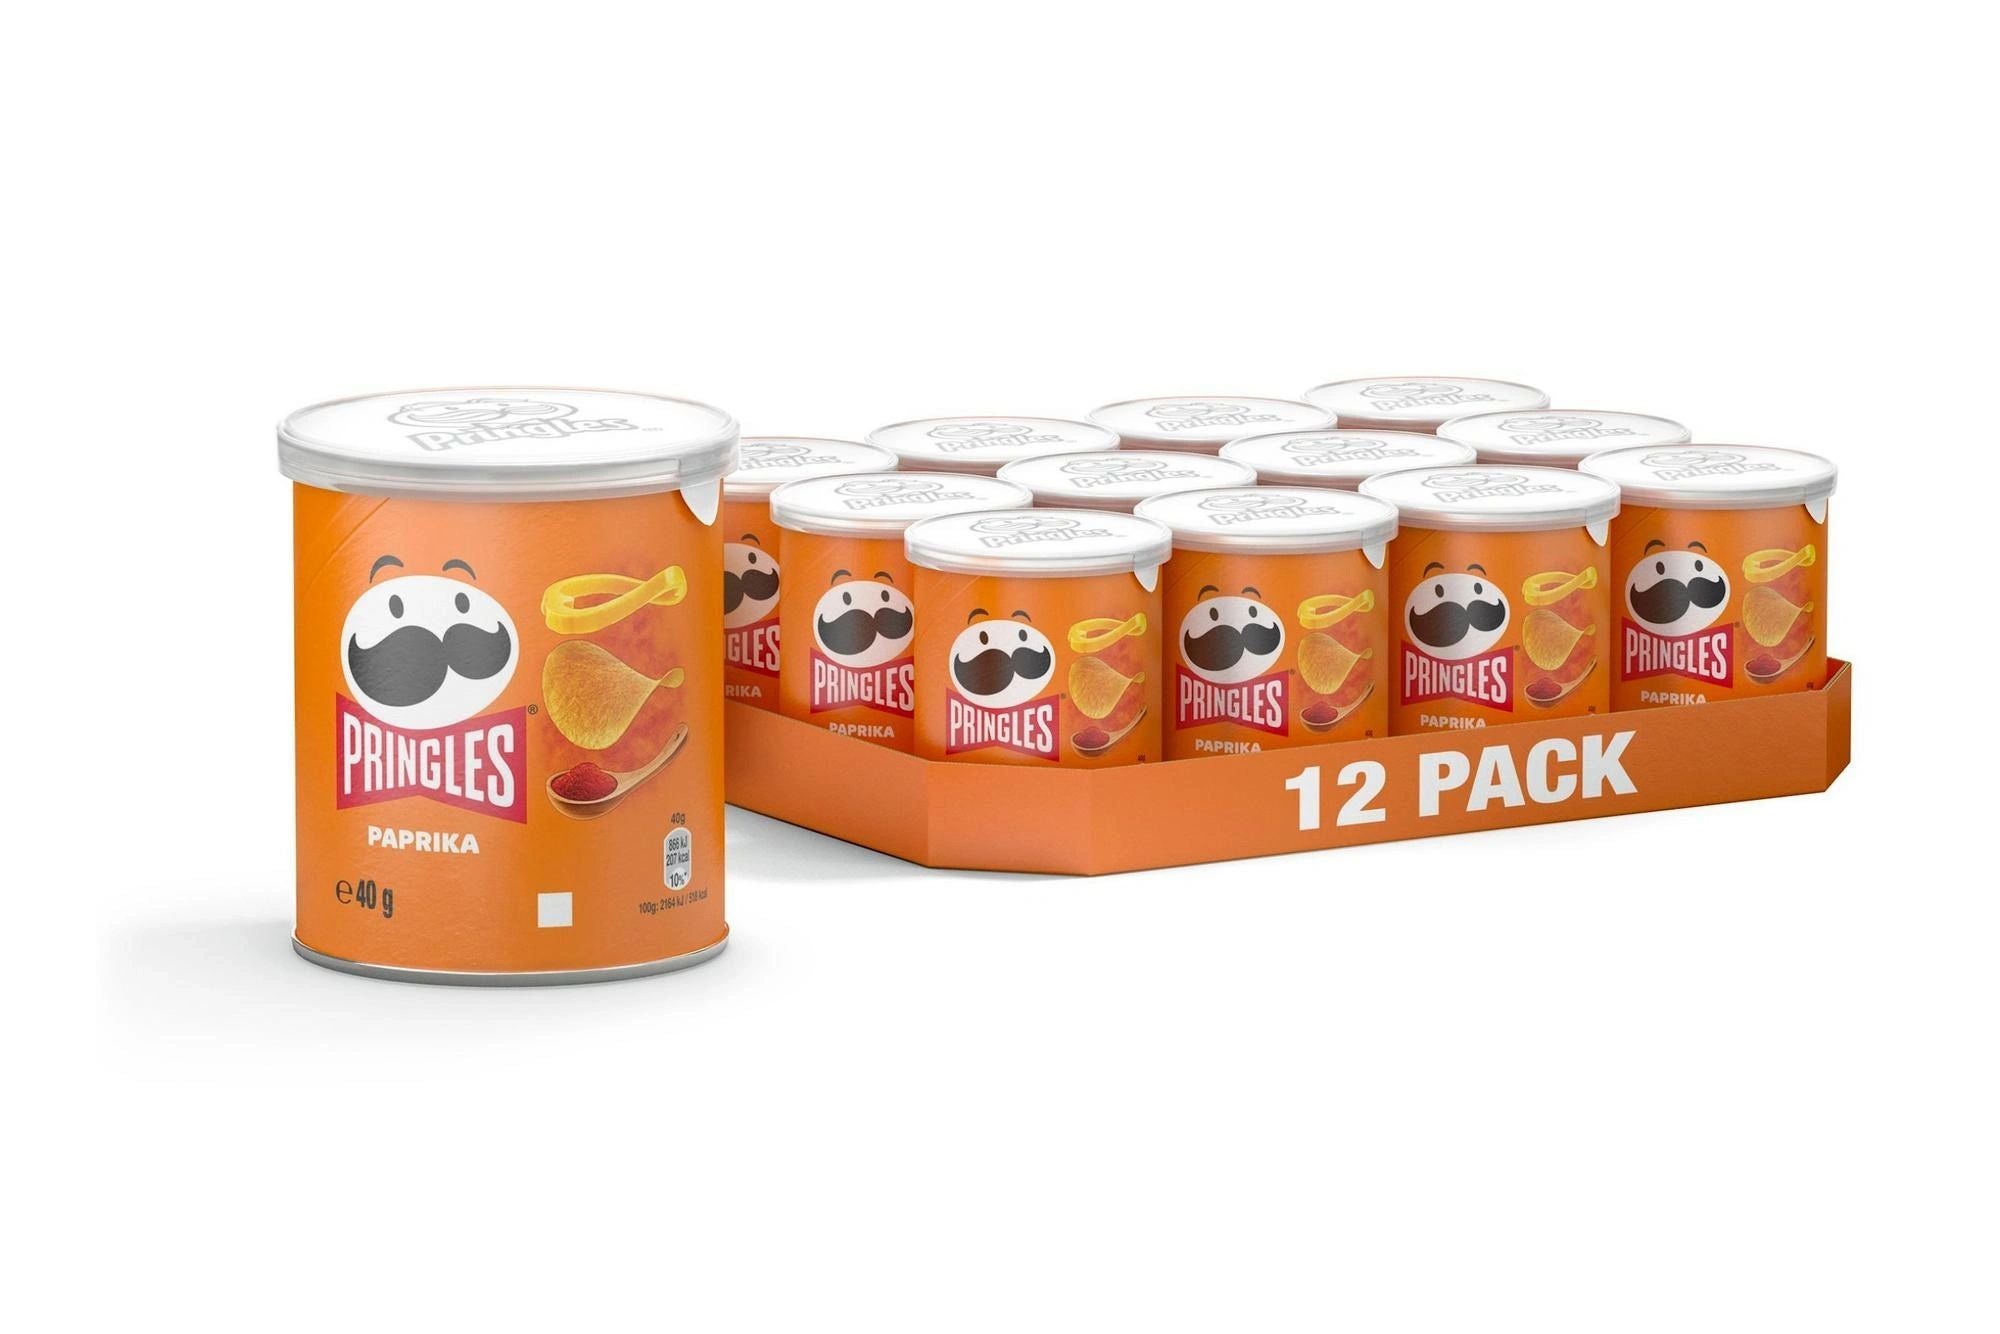 Pringles Hot Paprika - 40g - Pack of 12